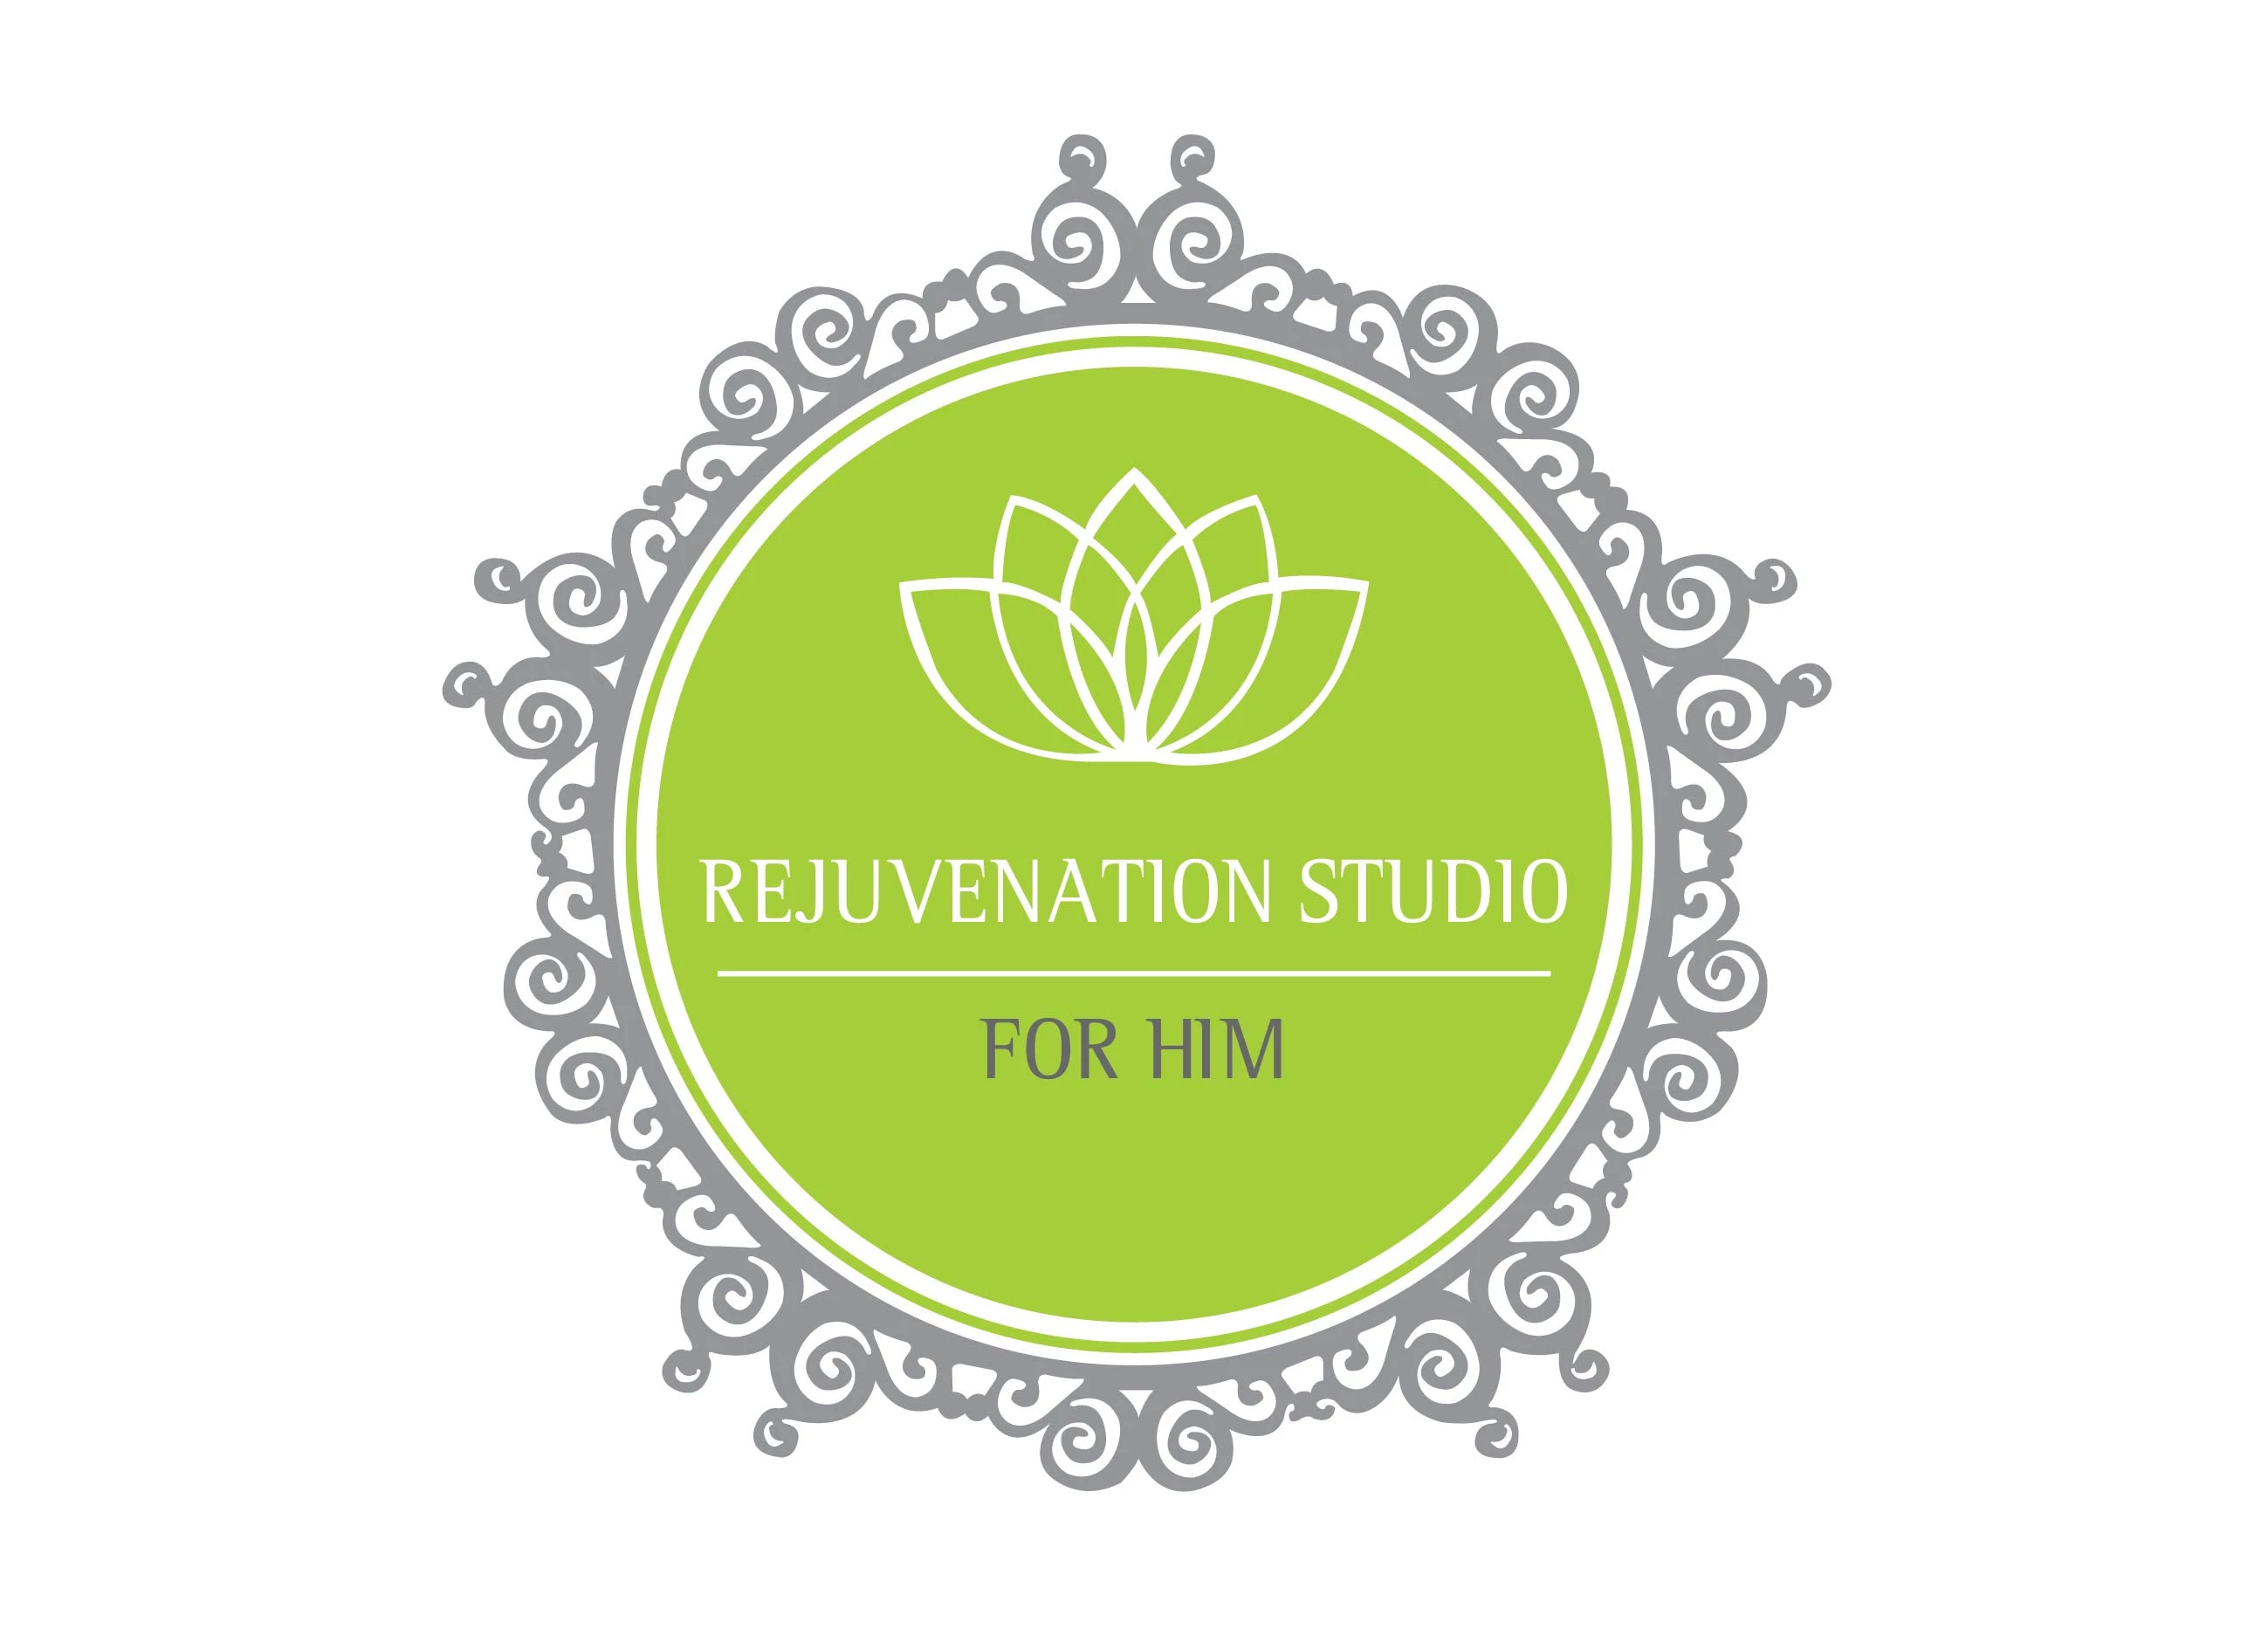 Rejuvenation Studio FOR HIM